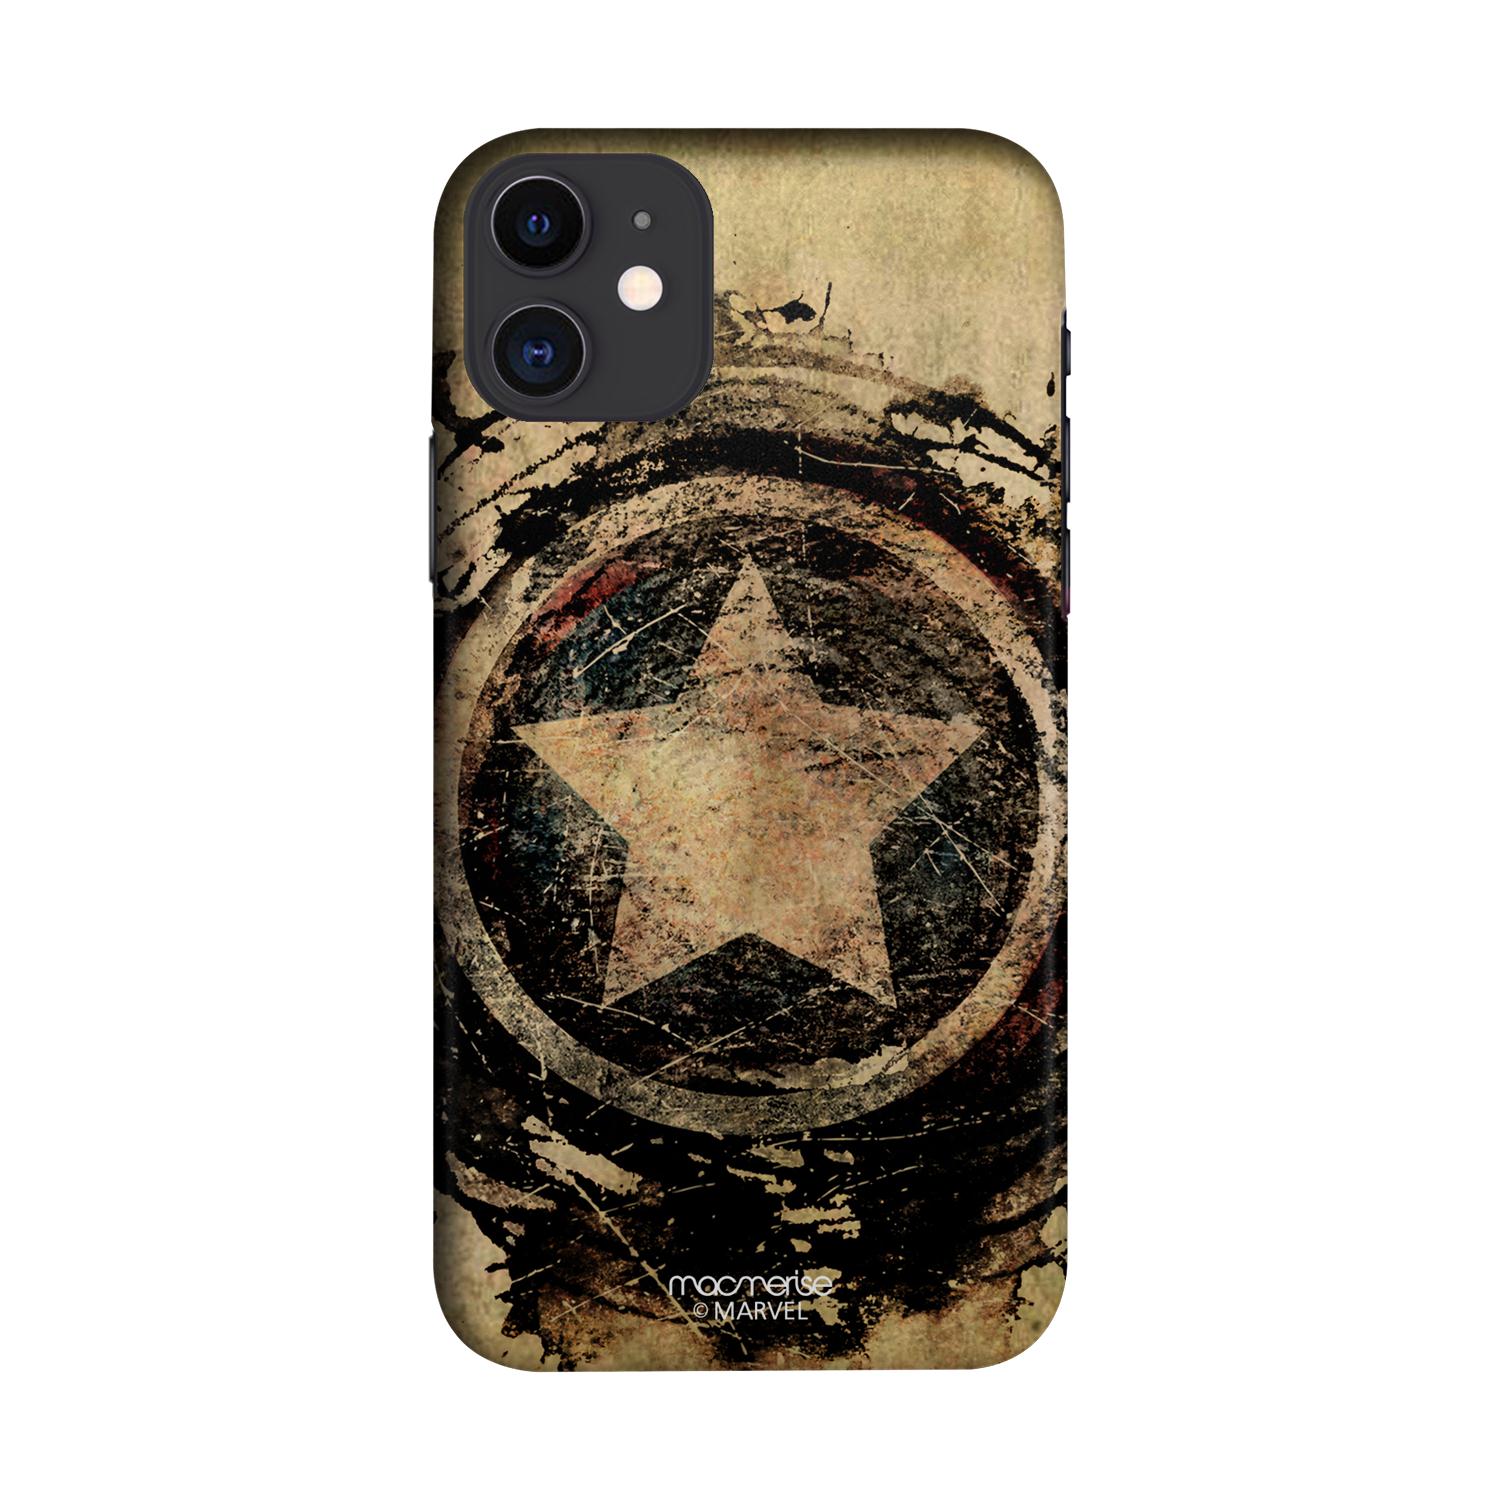 Buy Symbolic Captain Shield - Sleek Phone Case for iPhone 11 Online